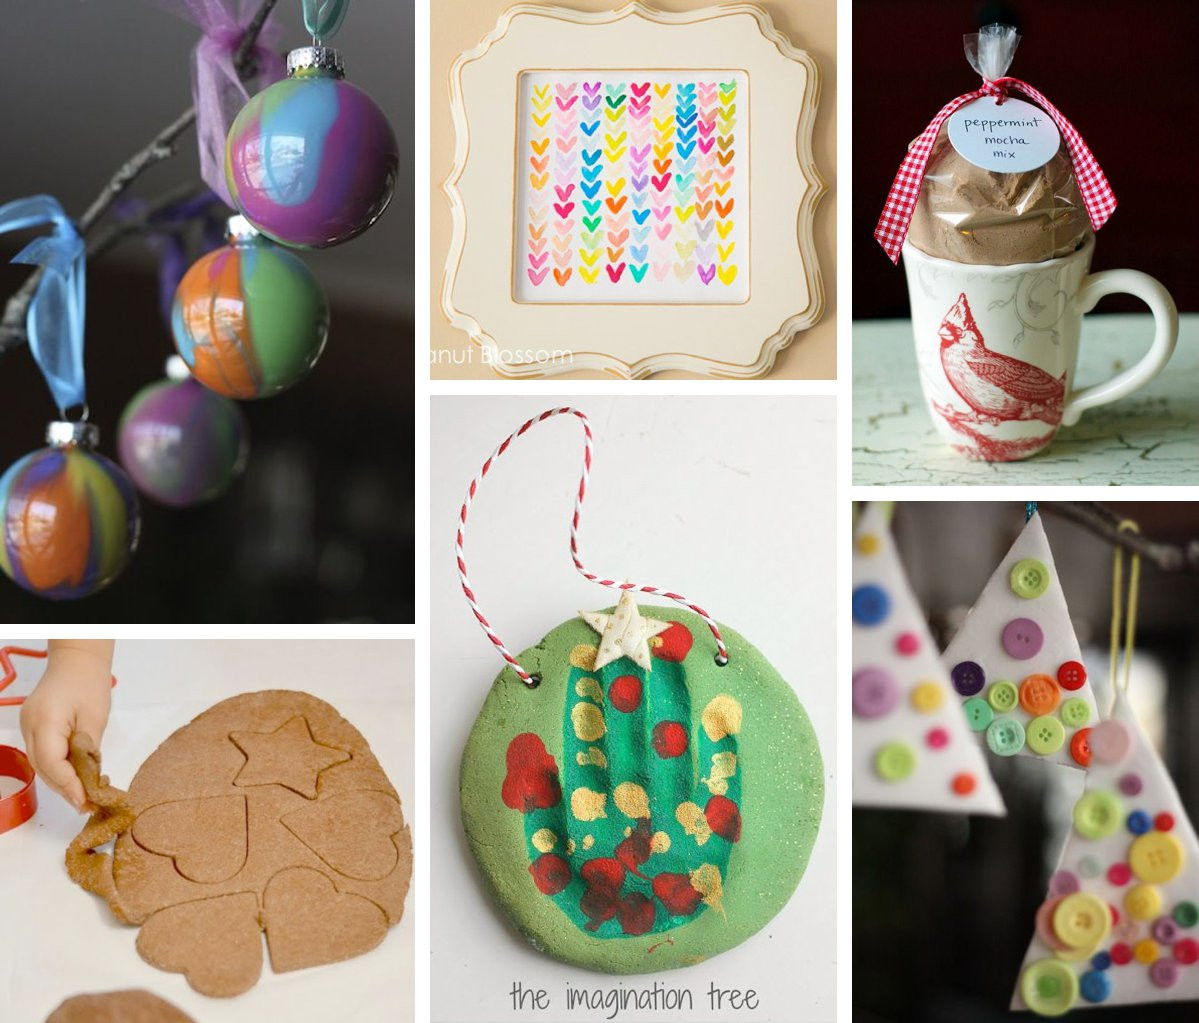 Handmade Christmas Gifts For Kids
 10 DIY Holiday Gifts Kids Can Help Make